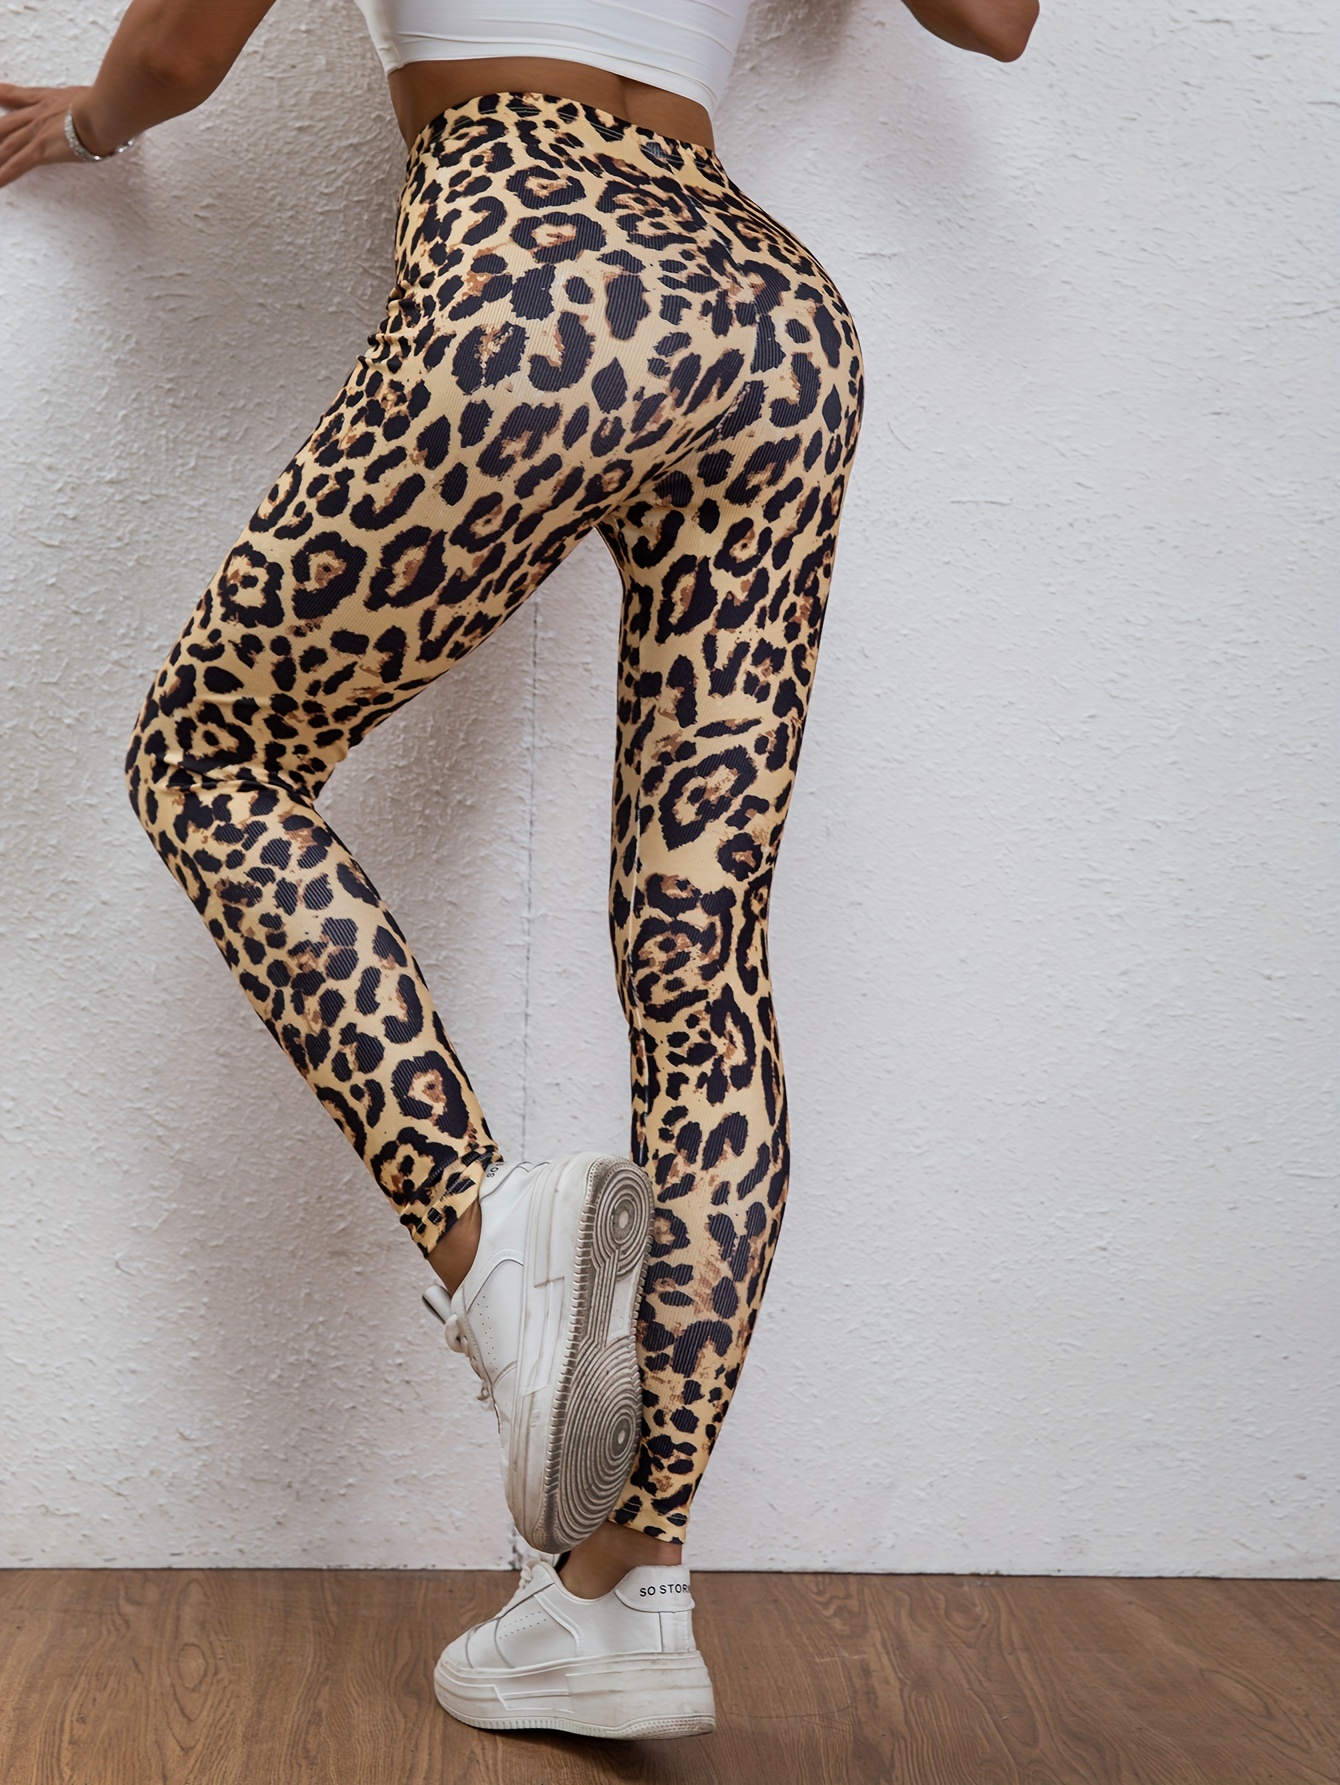 PKYGXZ Leopard Print Sports Leggings Women Fitness Exercise Yoga Pants  Tight Sexy Elastic Quick Dry Gym Slim Stretch Running Pants White Leopard  Print L : : Fashion